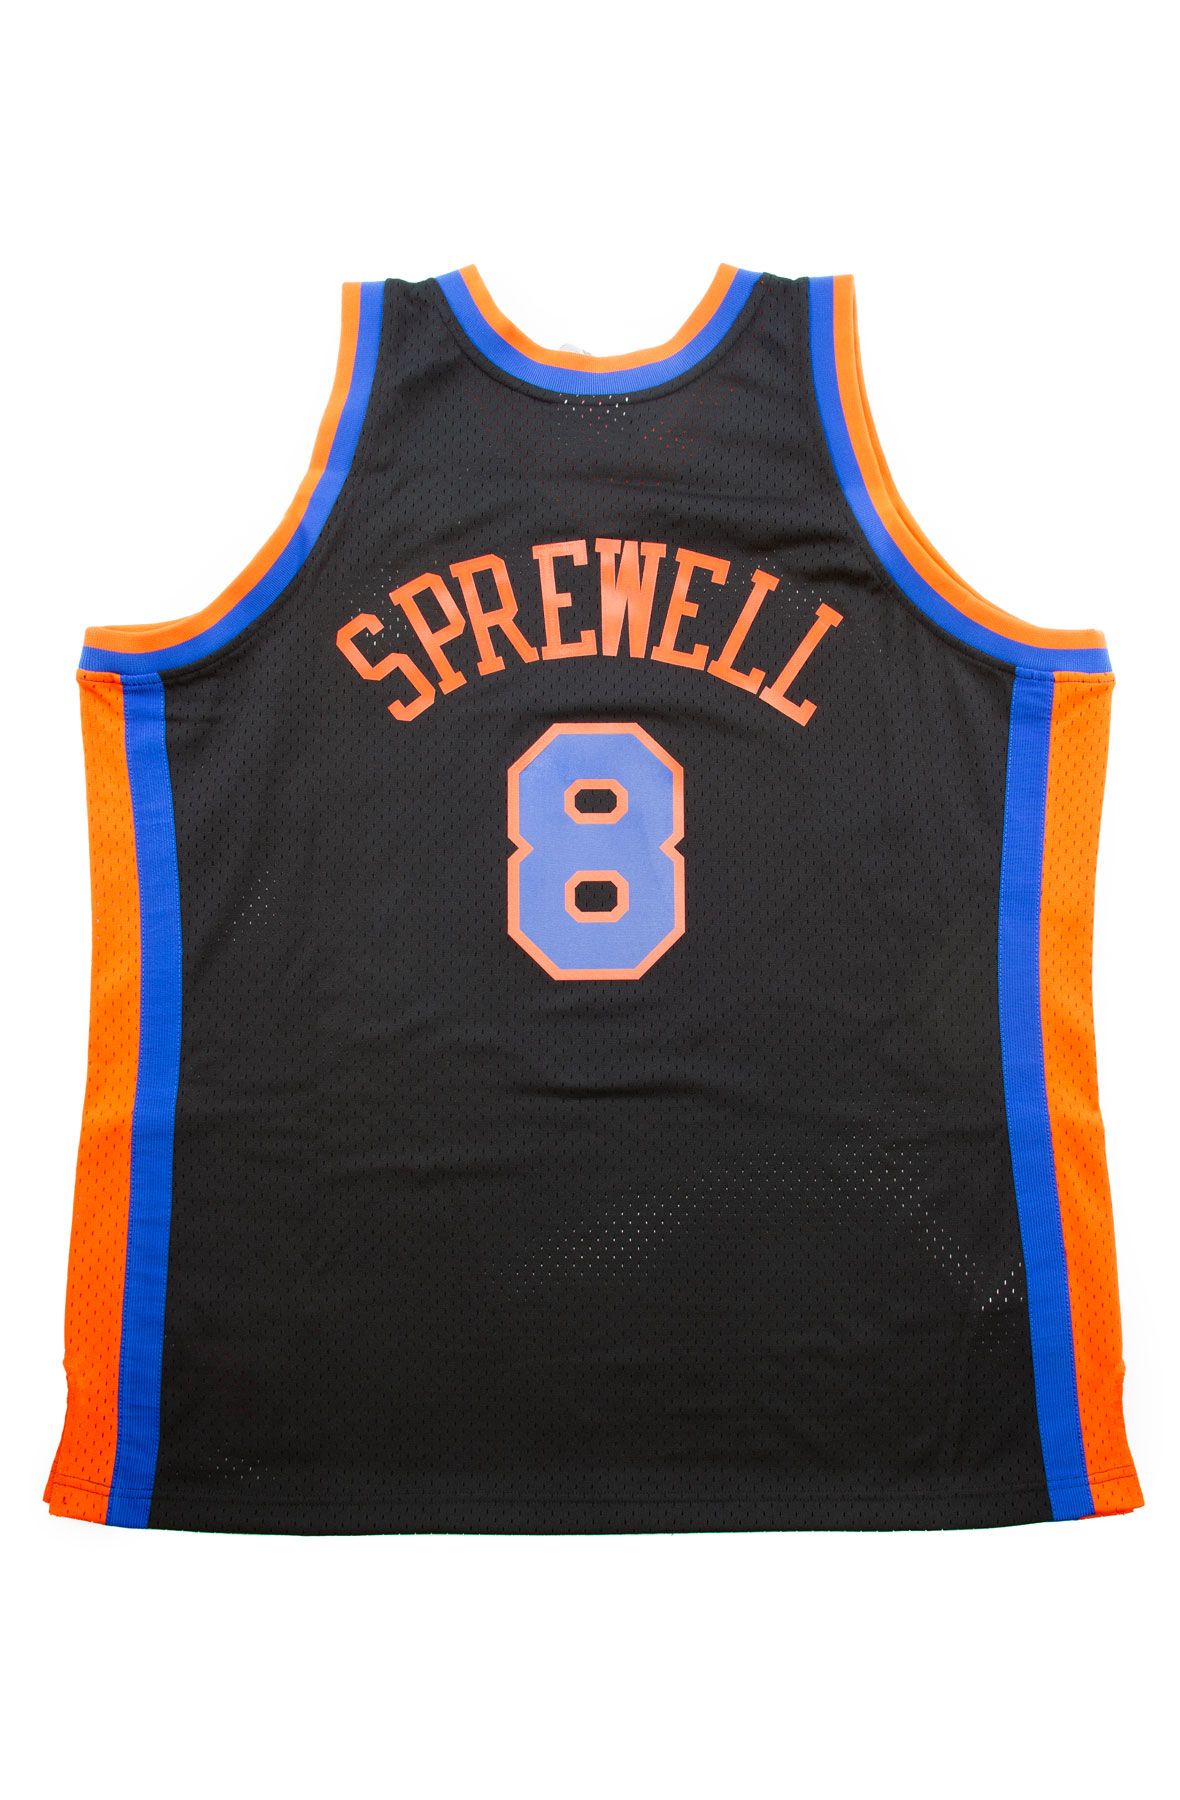 Latrell Sprewell Mitchell & Ness 98-99 Road Swingman Jersey